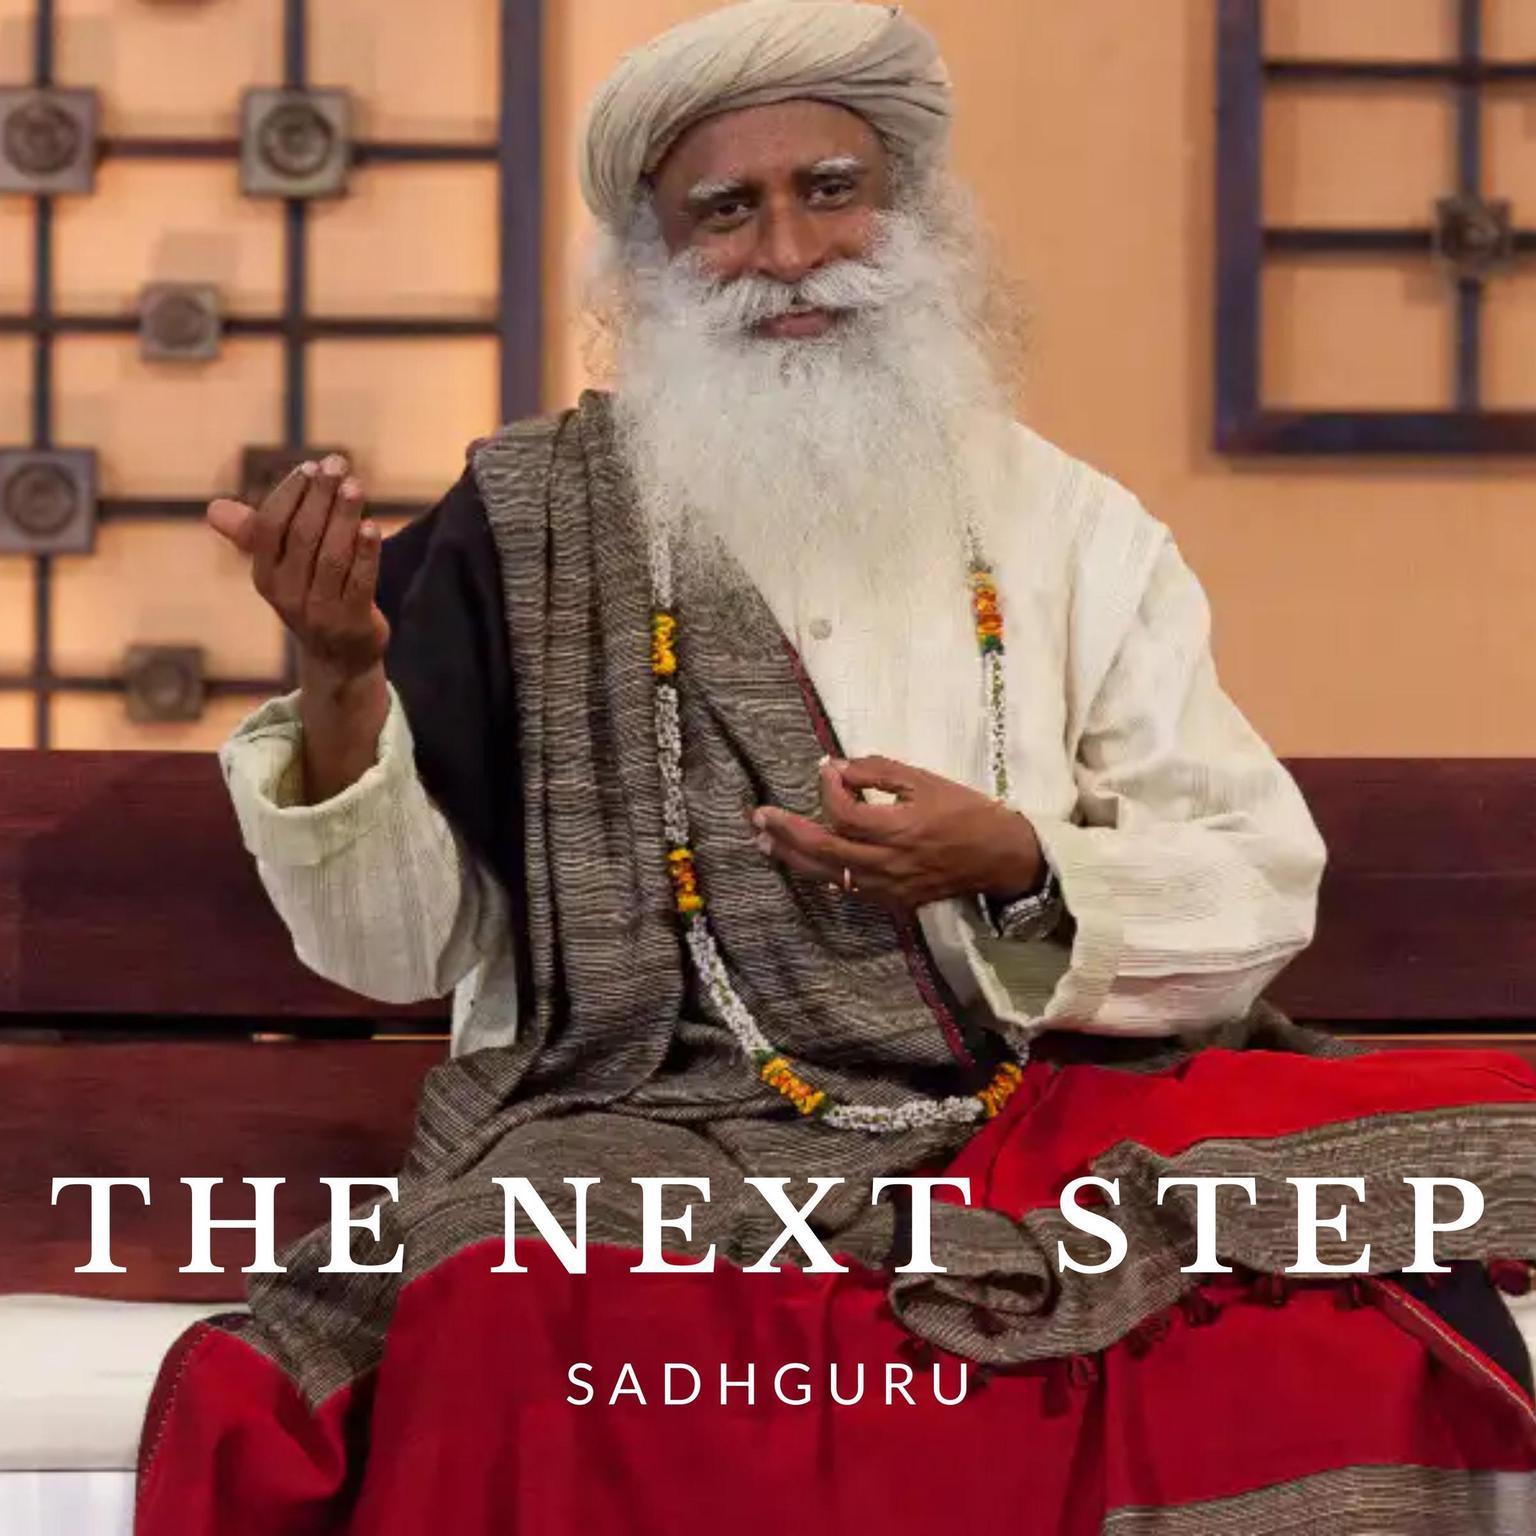 The Next Step Audiobook, by Sadhguru 